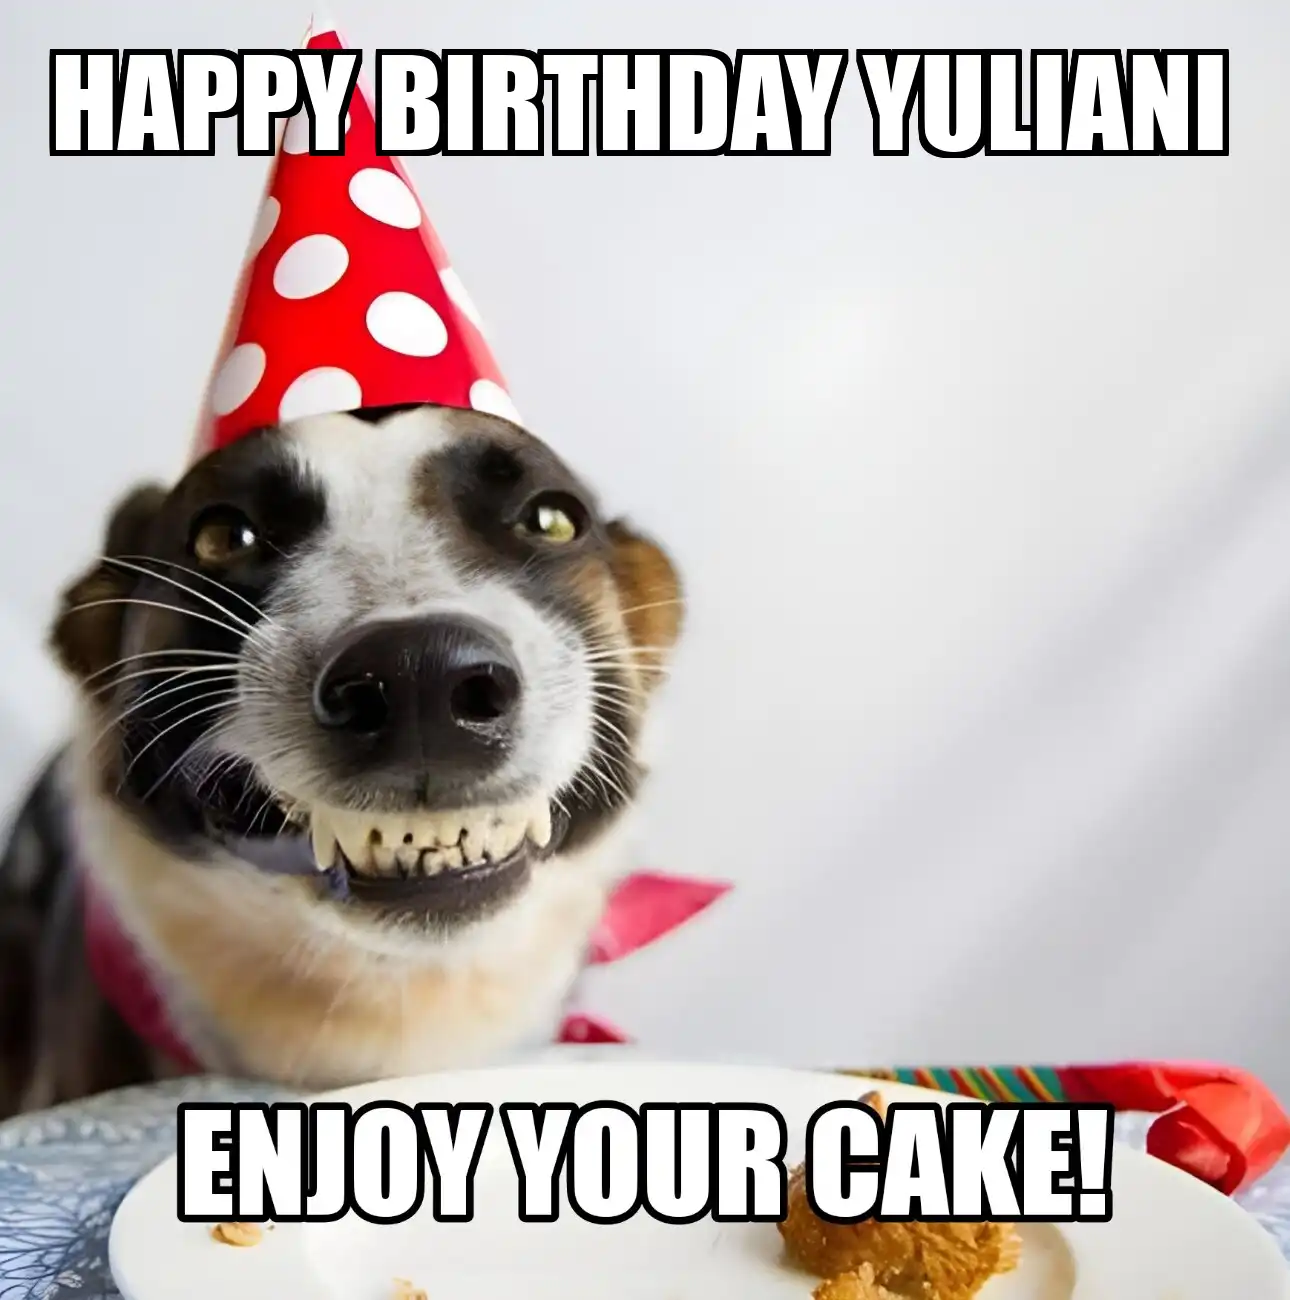 Happy Birthday Yuliani Enjoy Your Cake Dog Meme